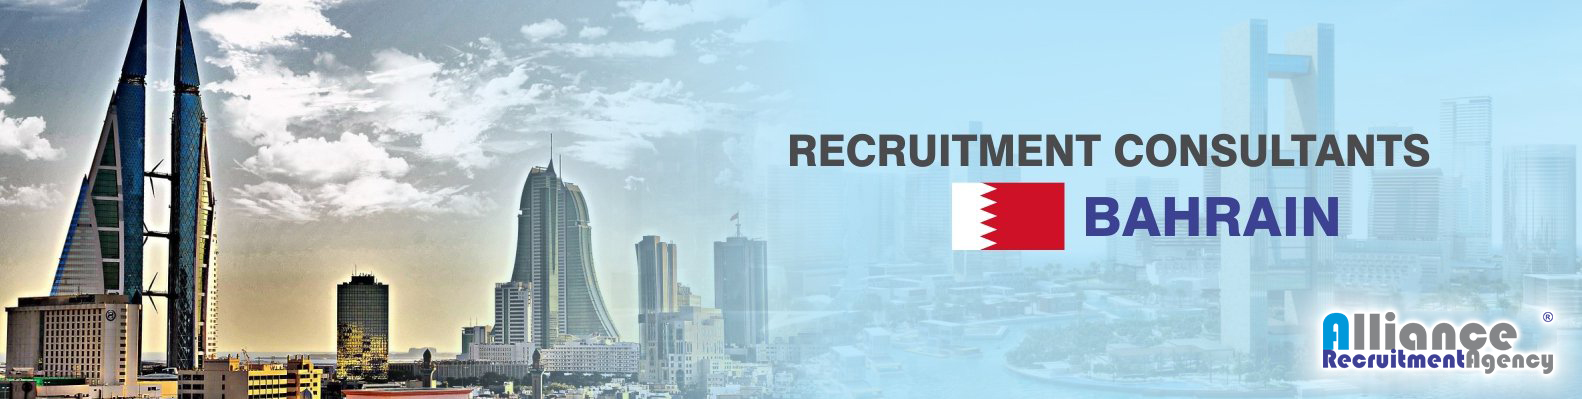 bahrain recruitment agency